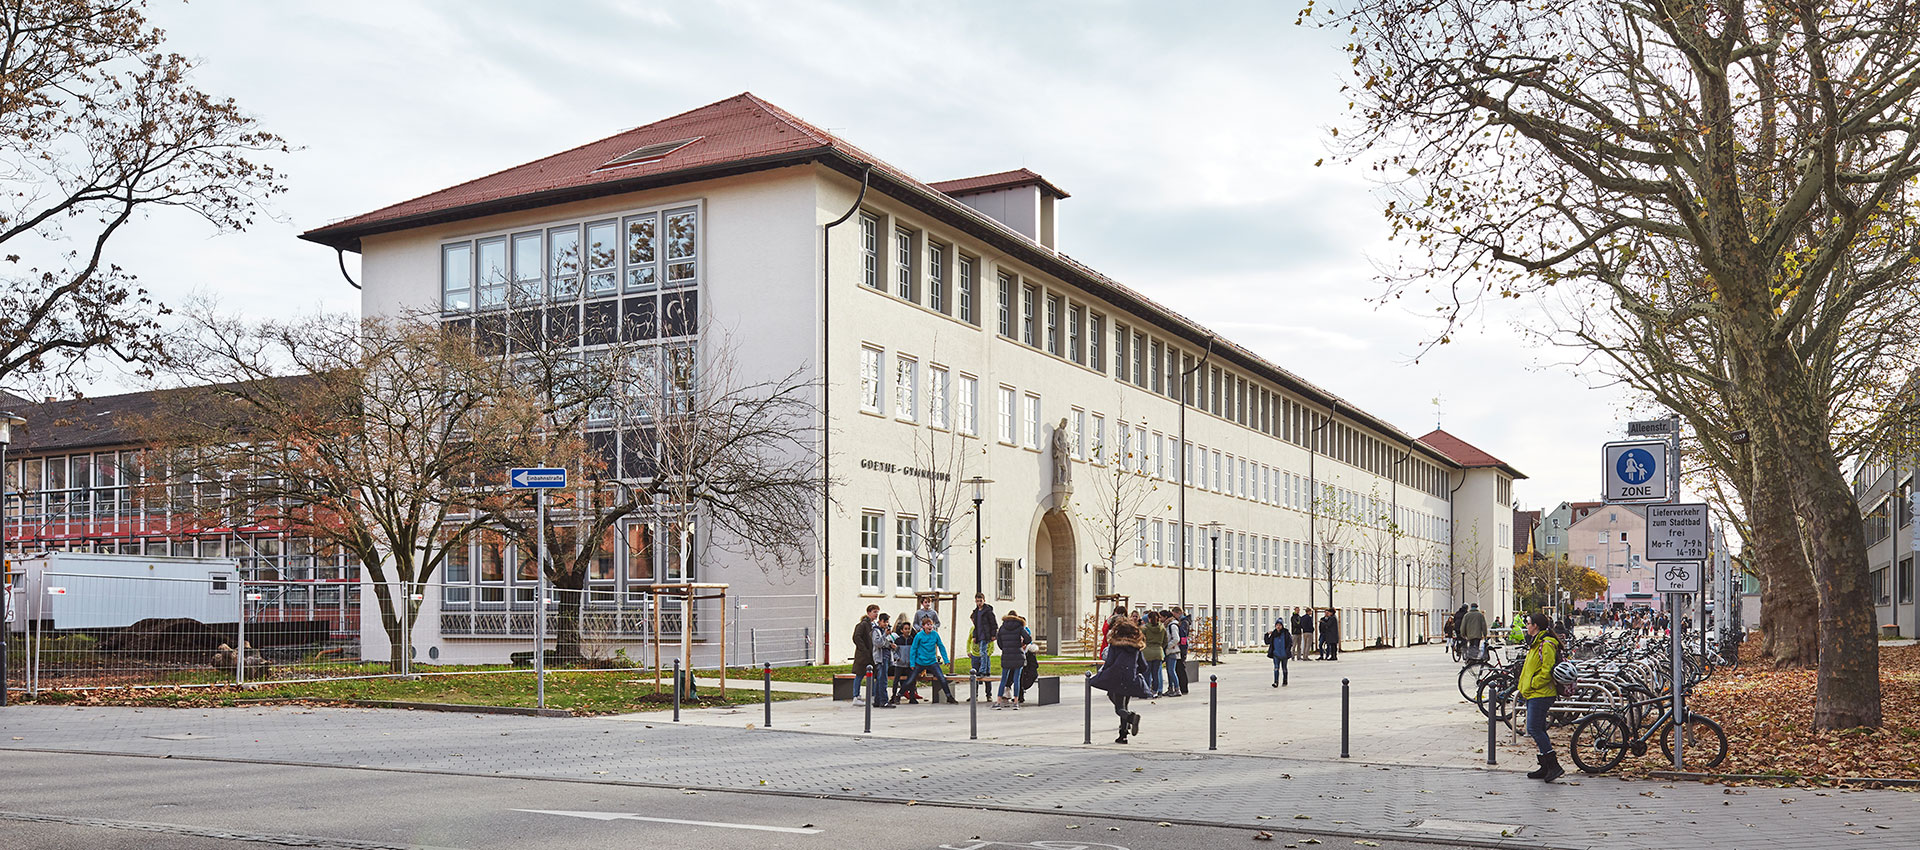 Goethe-Gymnasium Ludwigsburg